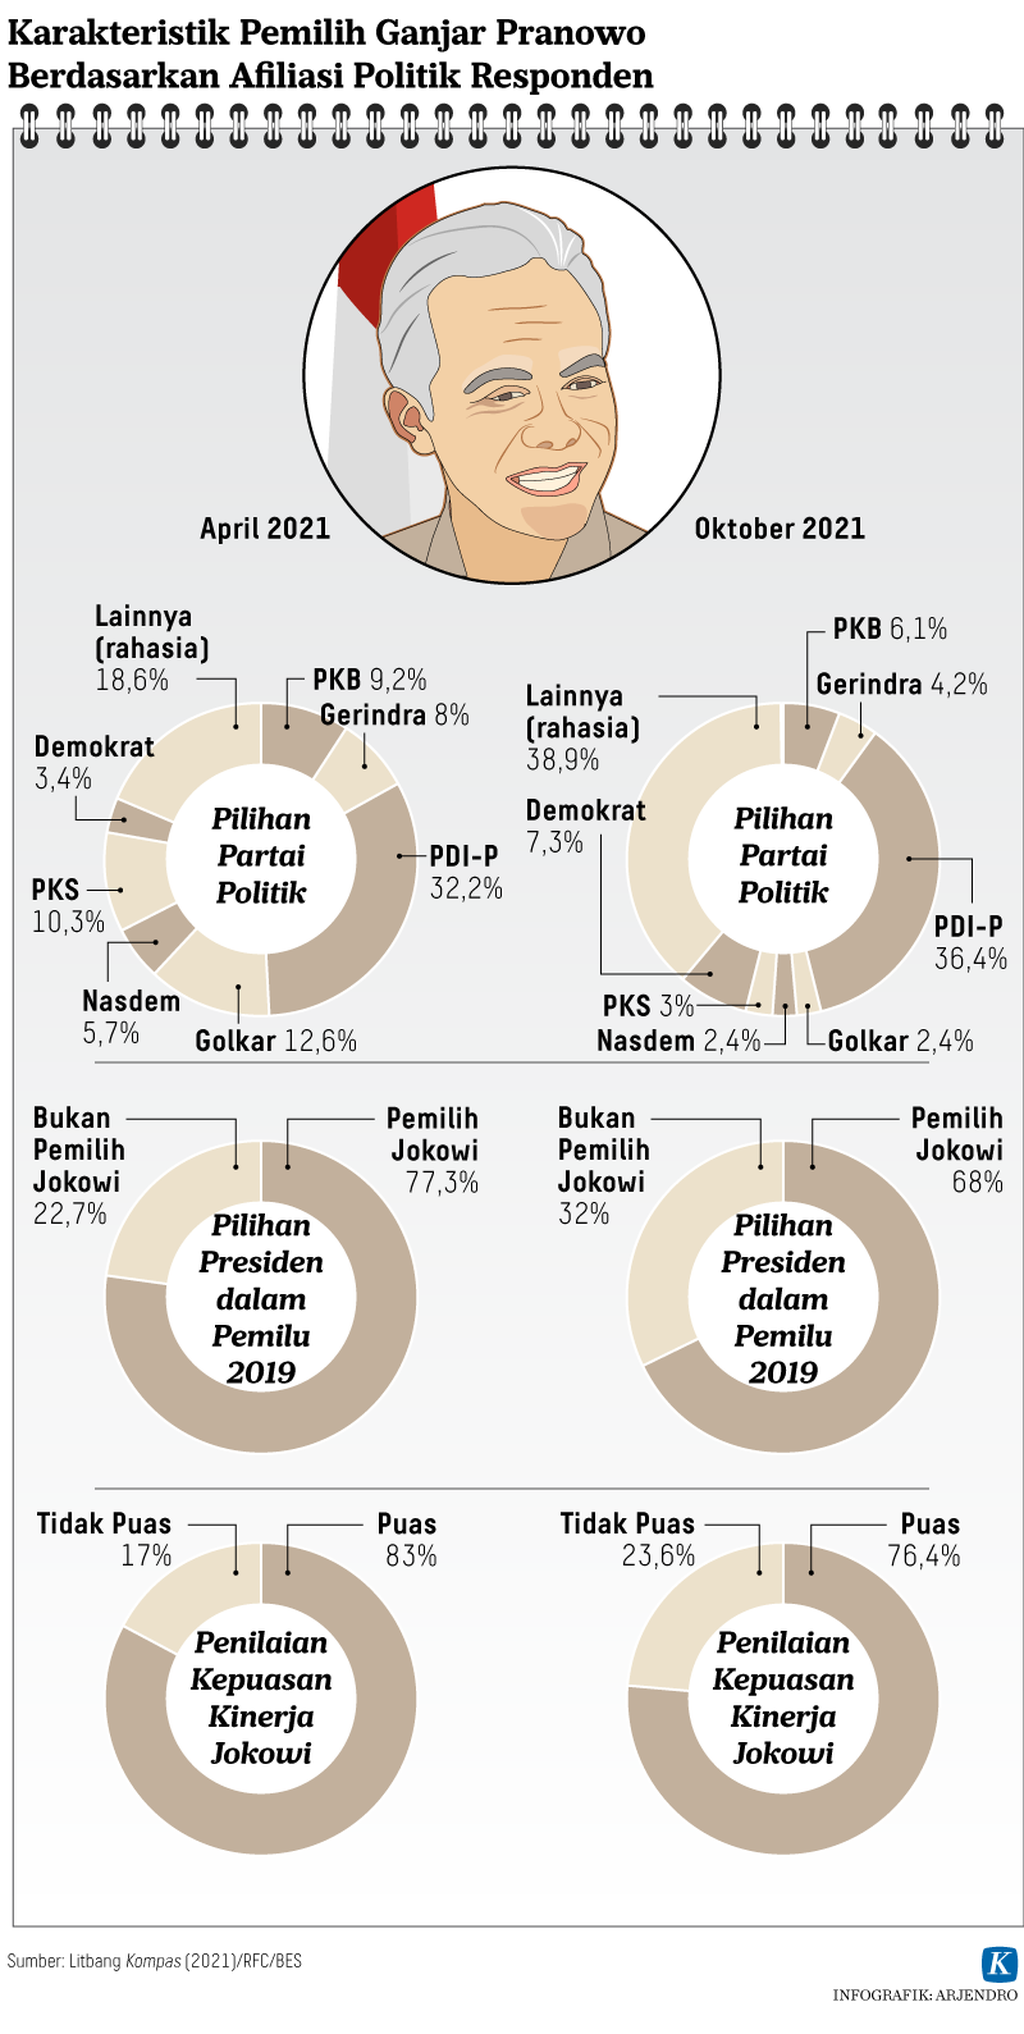 Karakteristik Pemilih Ganjar Pranowo Berdasarkan Afiliasi Politik Responden